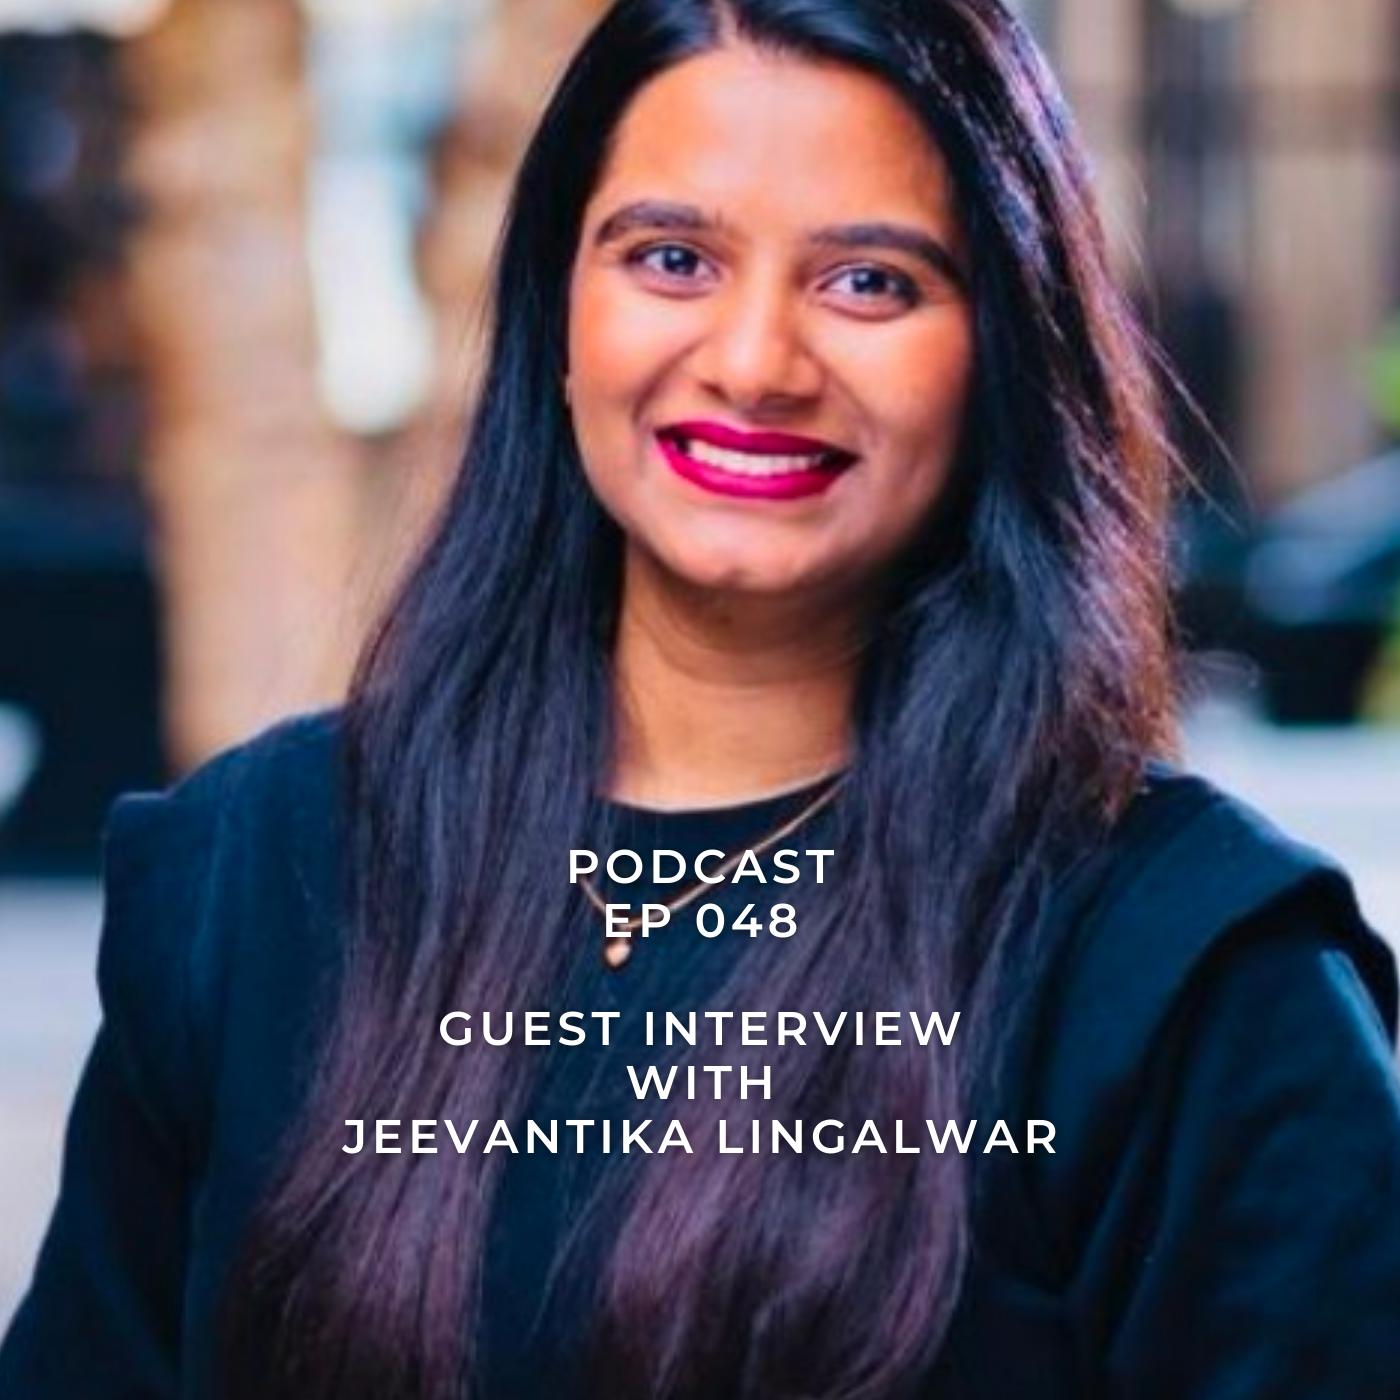 Guest Interview with Jeevantika Lingalwar